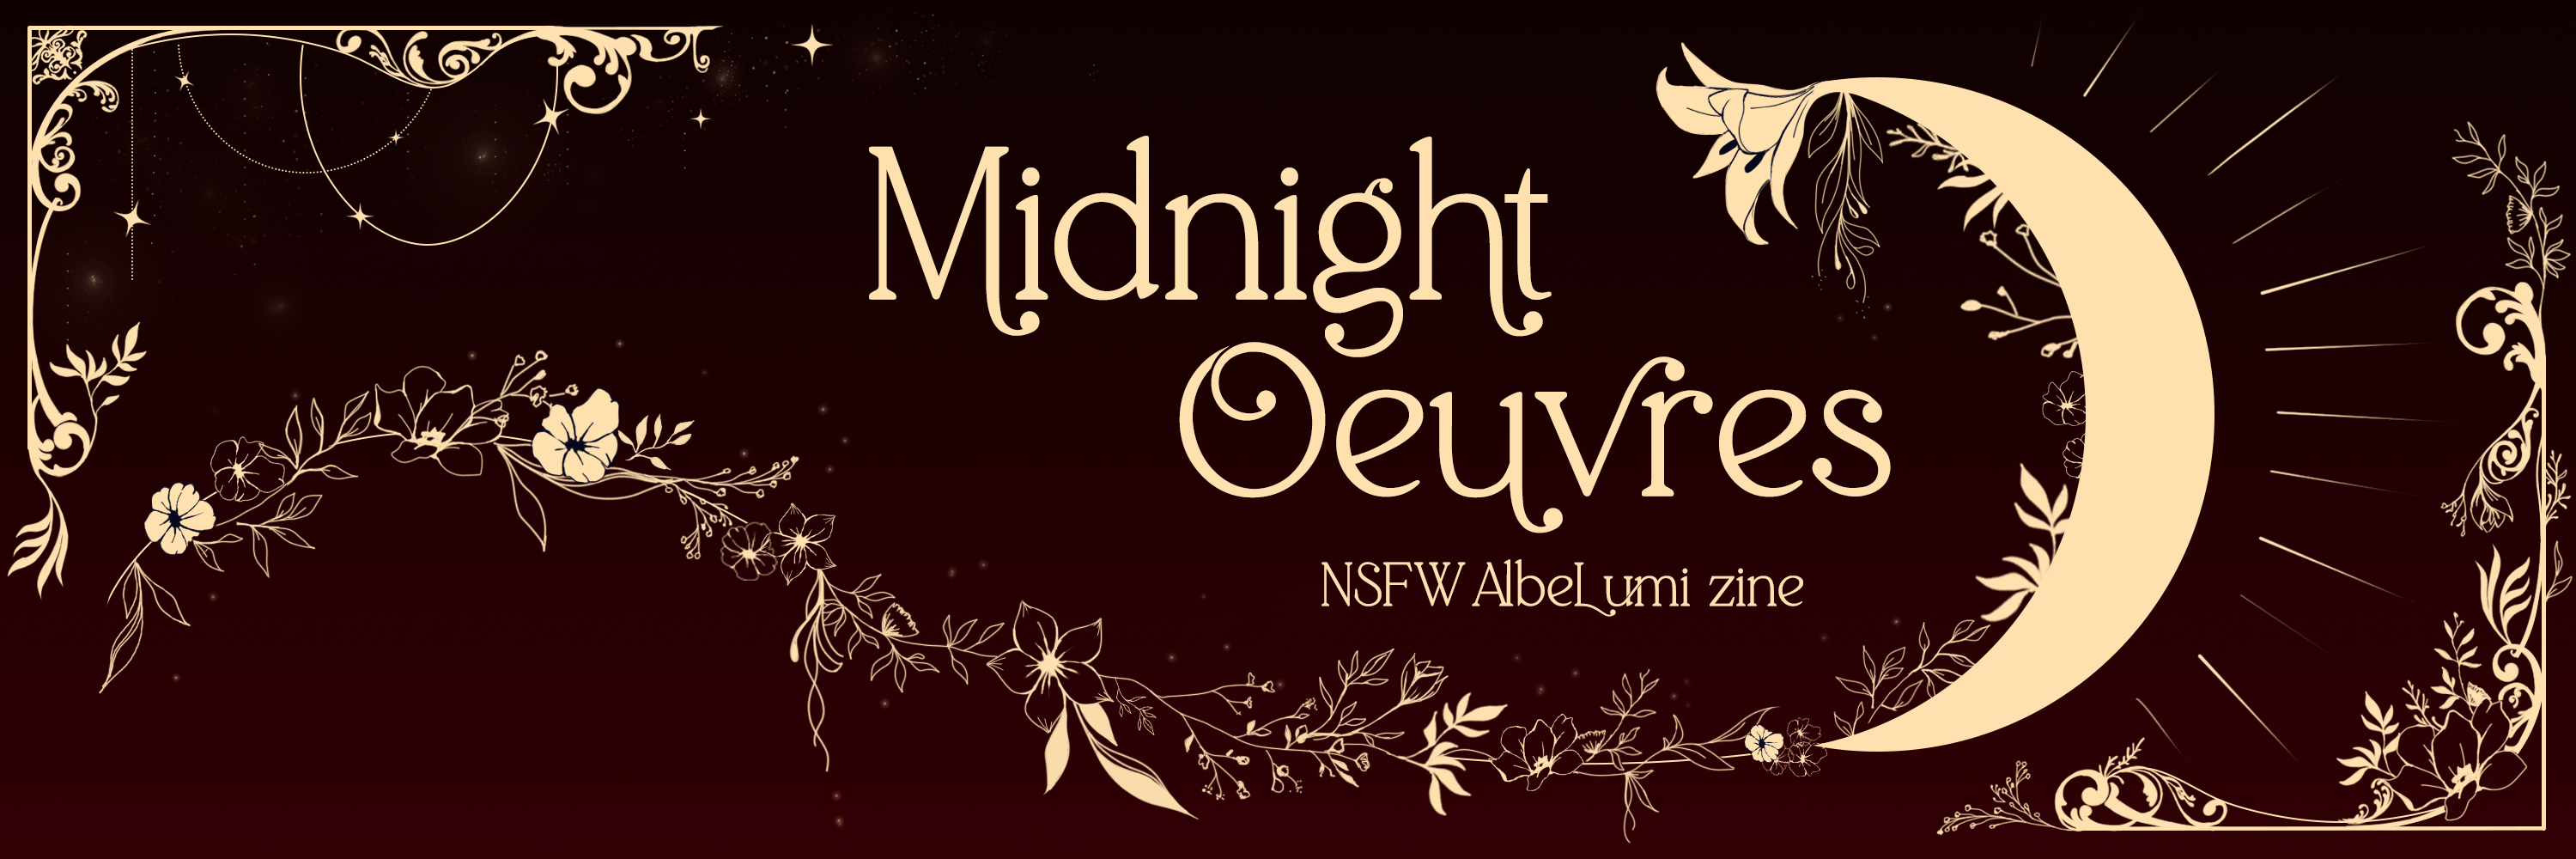 Midnight Oeuvres - A NSFW Albelumi Zine